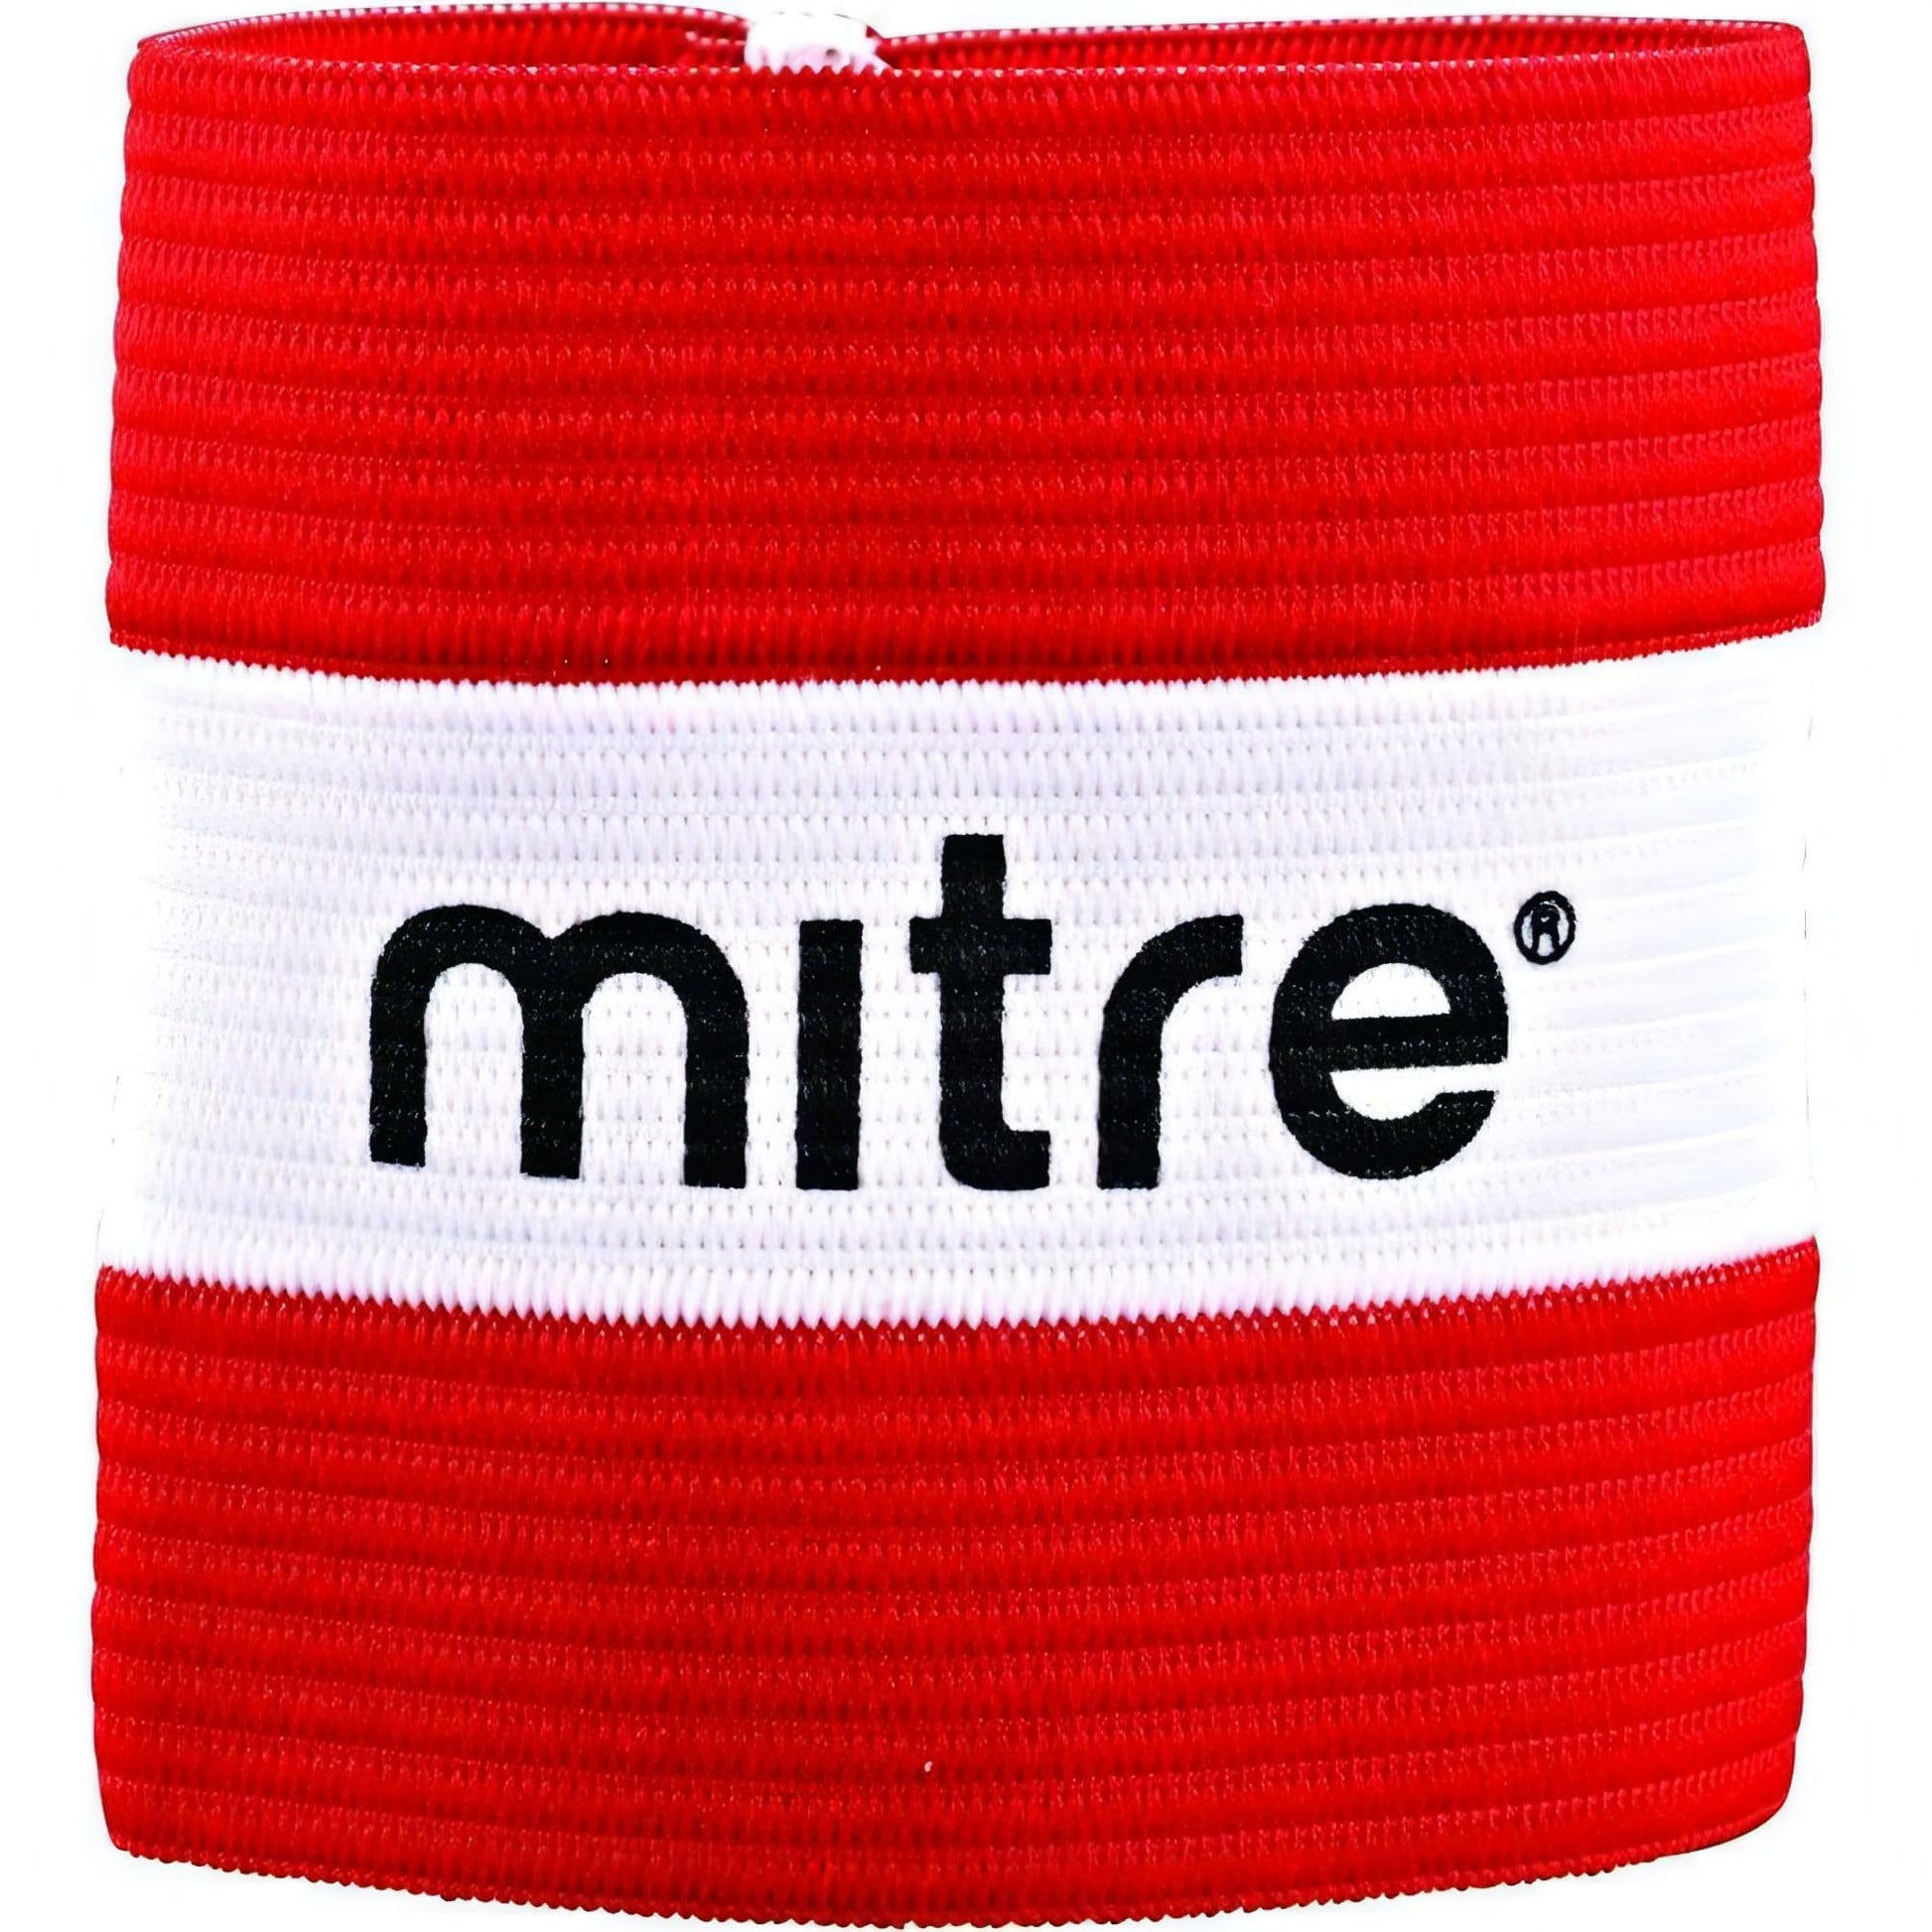 Mitre Captains Mens Armband - Red 5037823526603 - Start Fitness